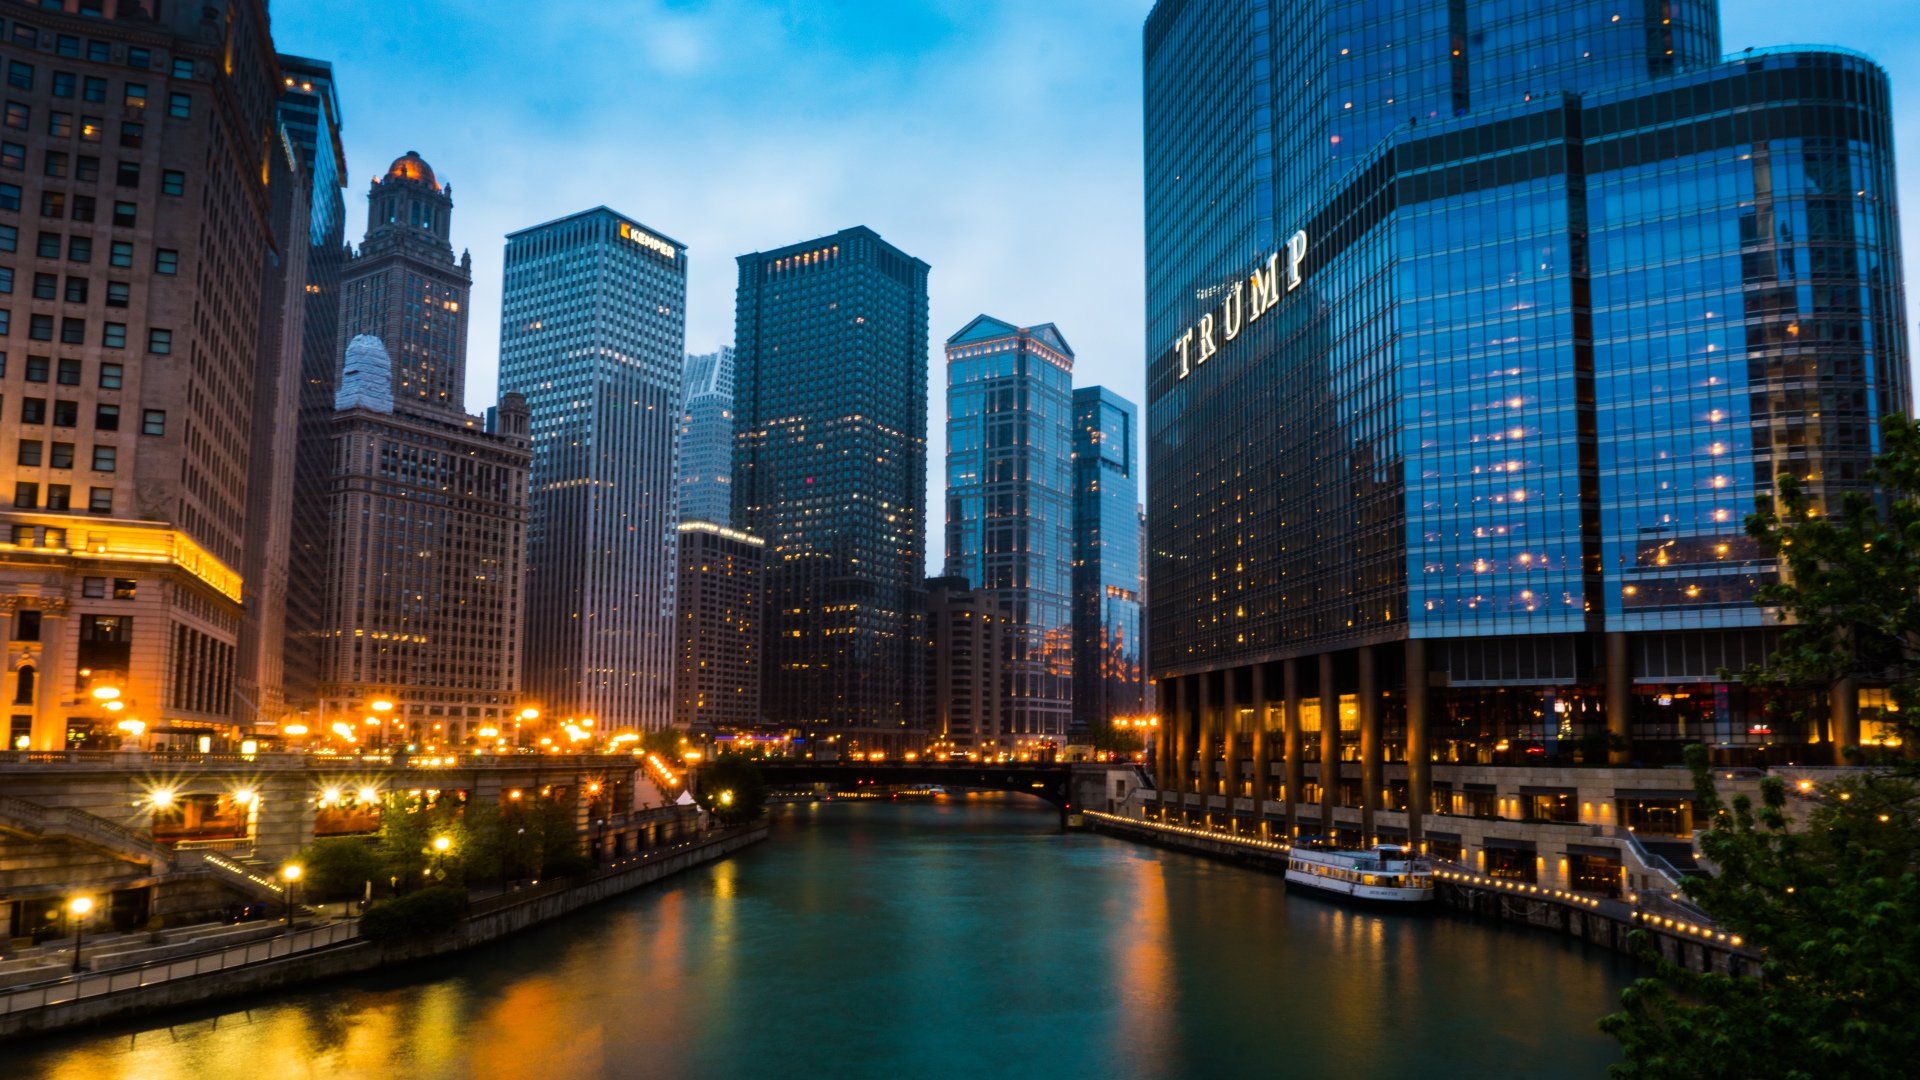 Skyline Photo of Chicago at night